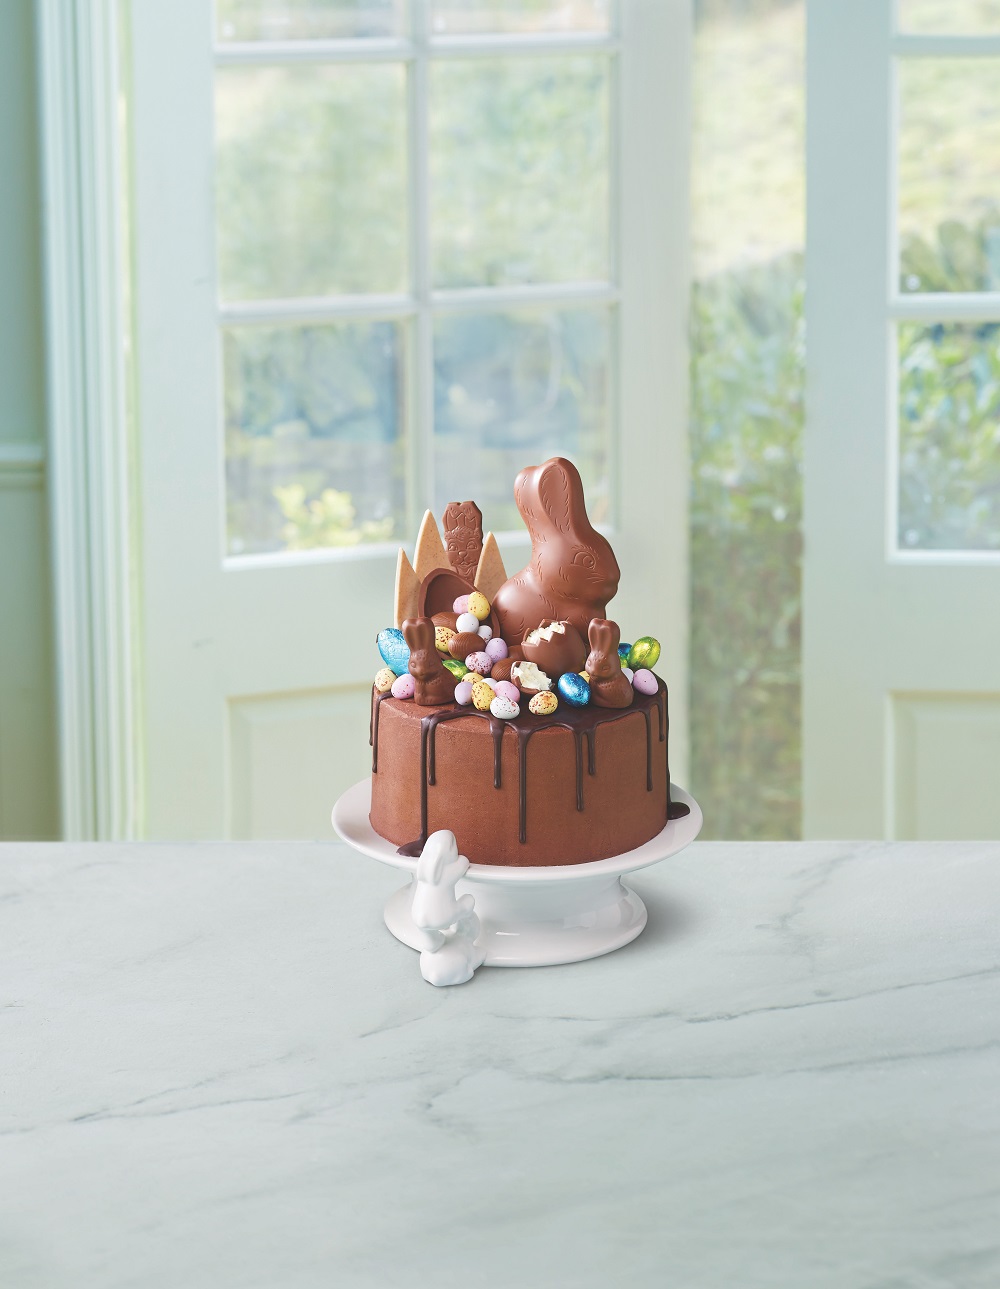 Aldi's Show-Stopper Easter Chocolate Cake Recipe: